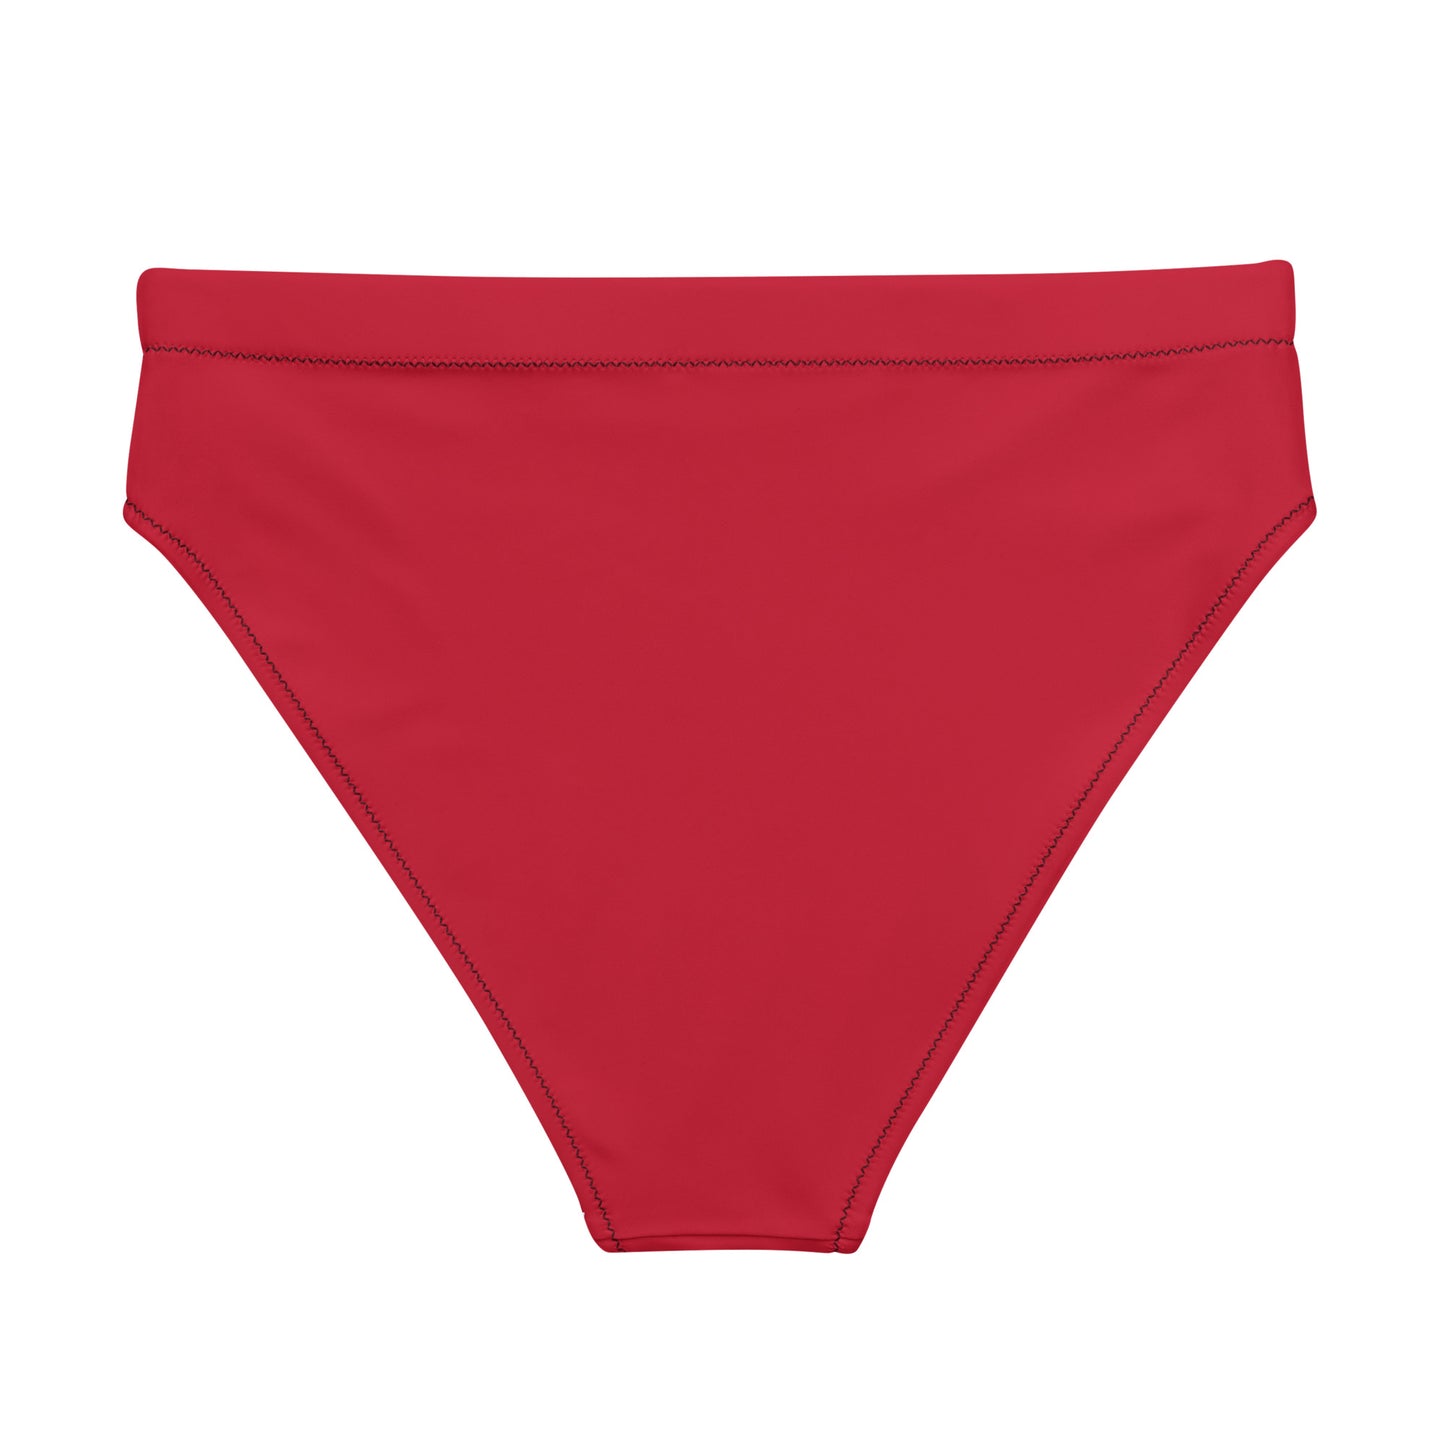 DH Lil' Debbie Prostaff Bikini Bottoms in Red